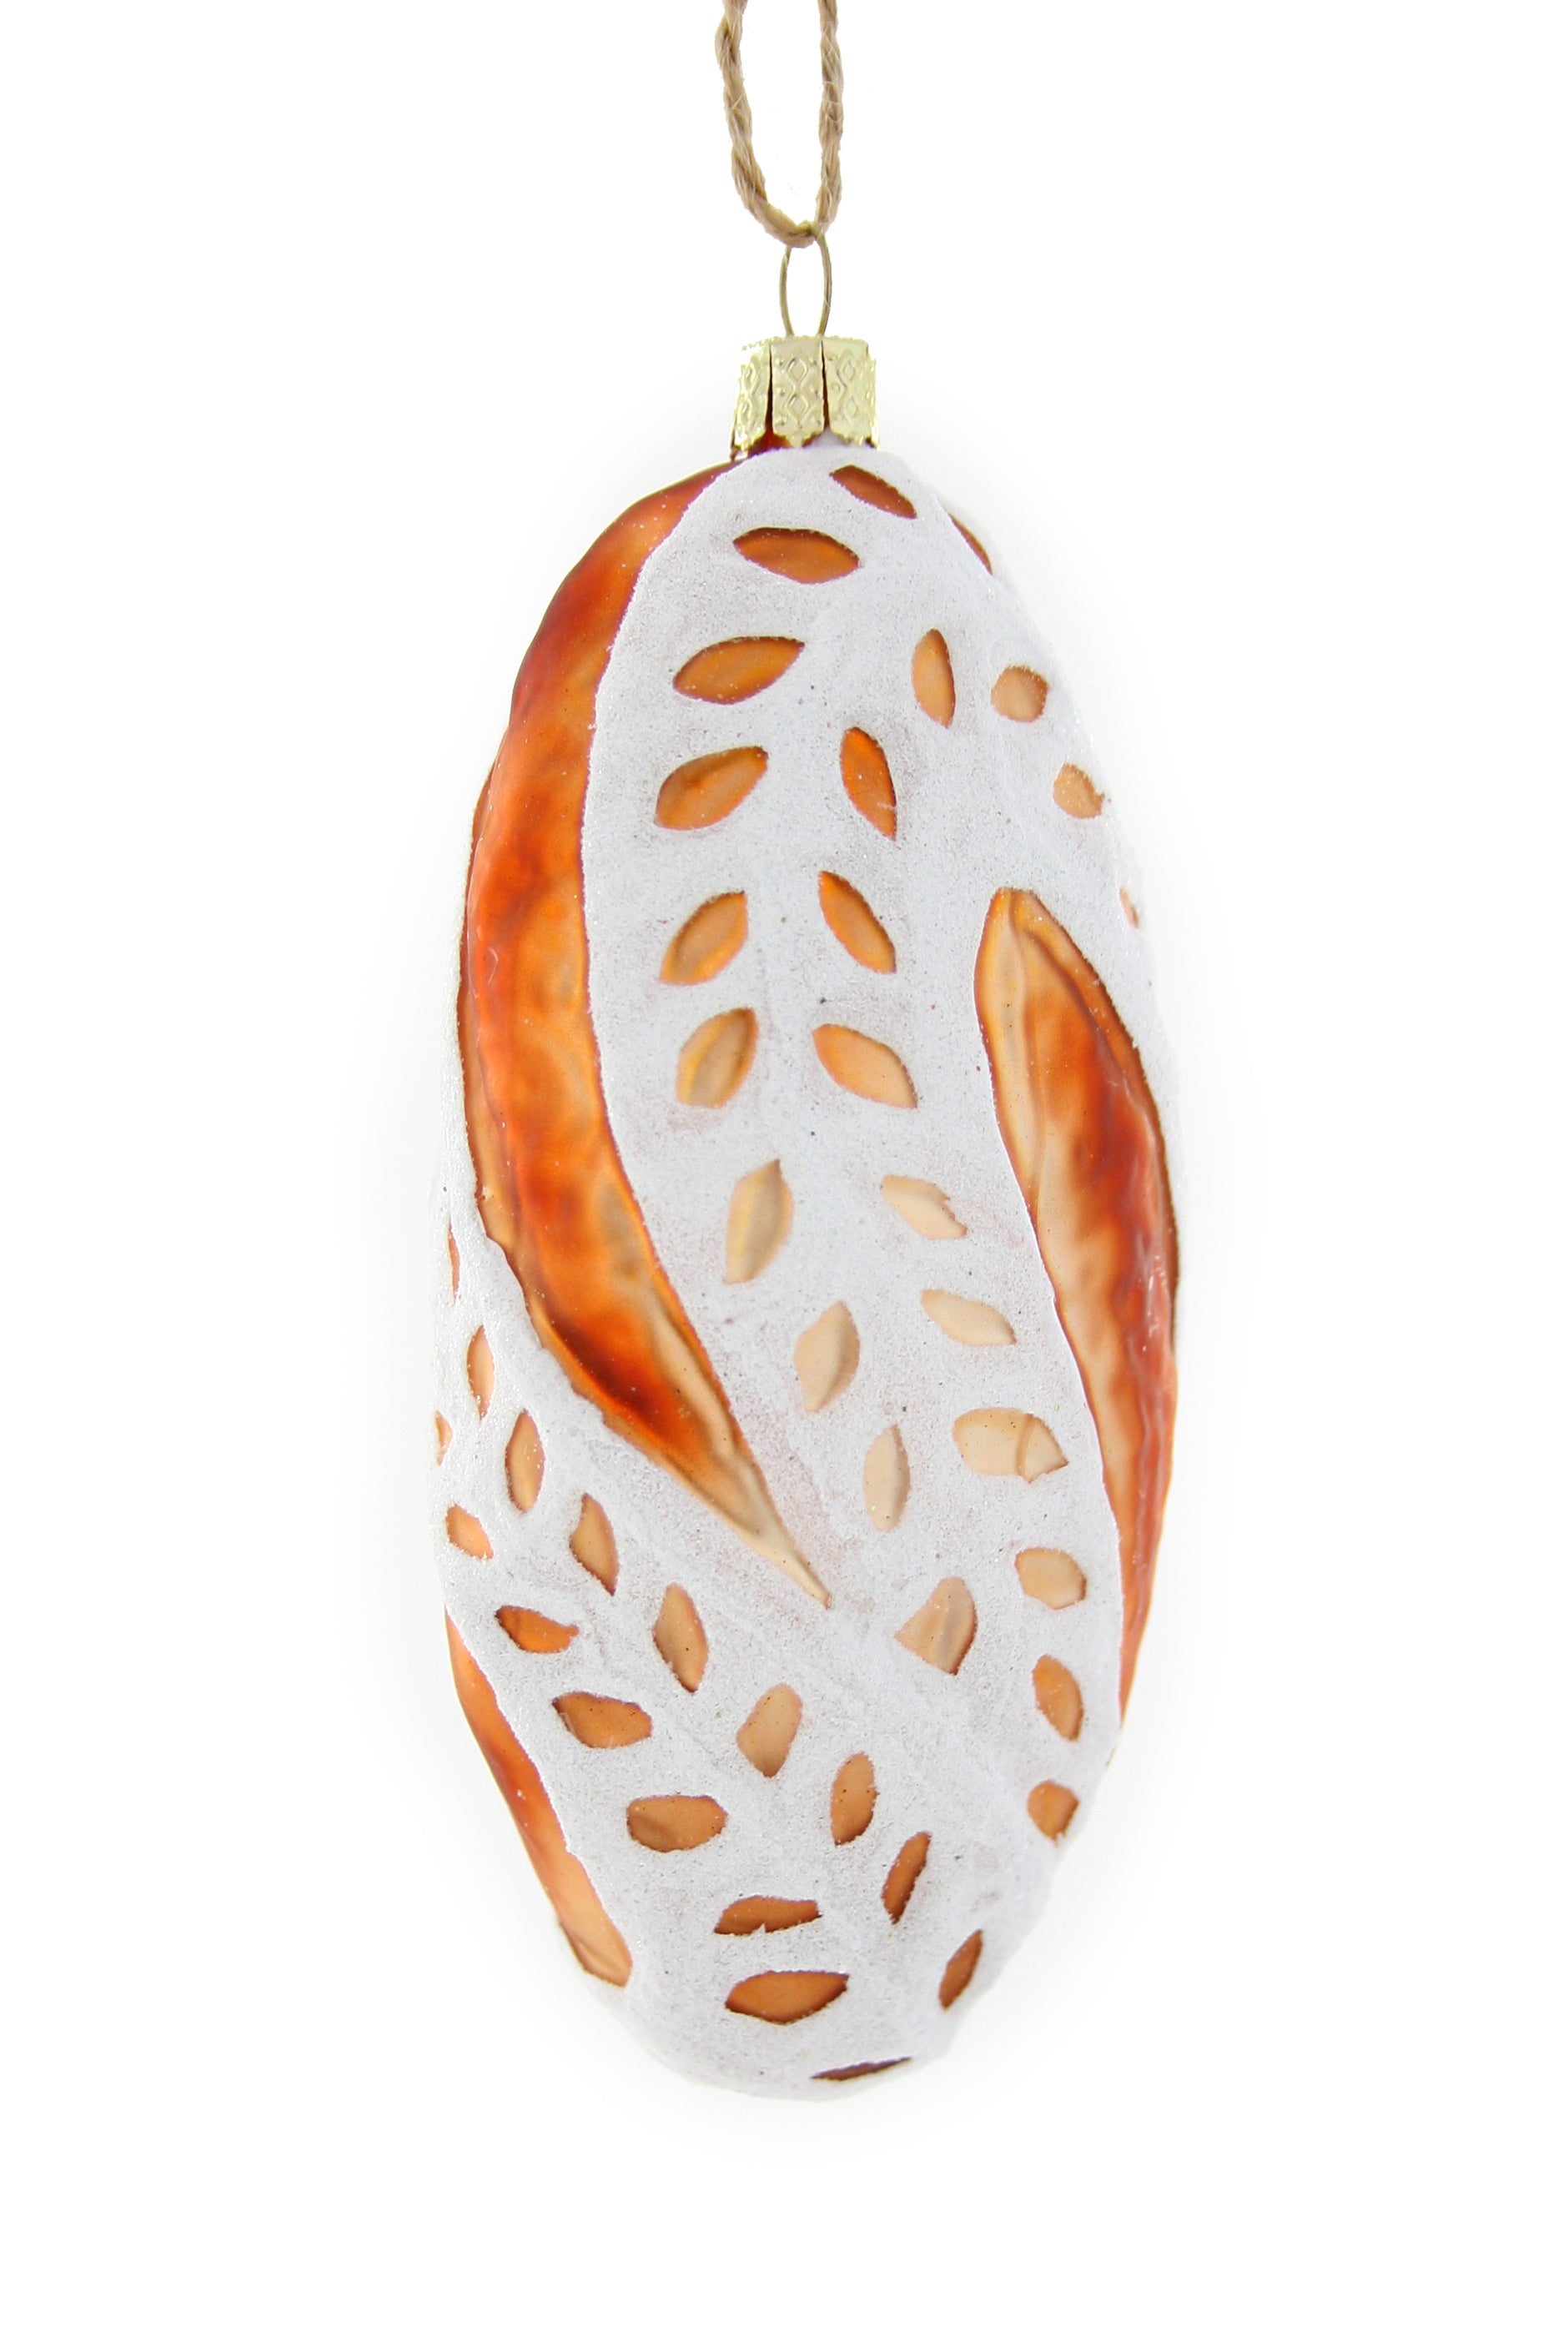 Rustic Bread Ornament